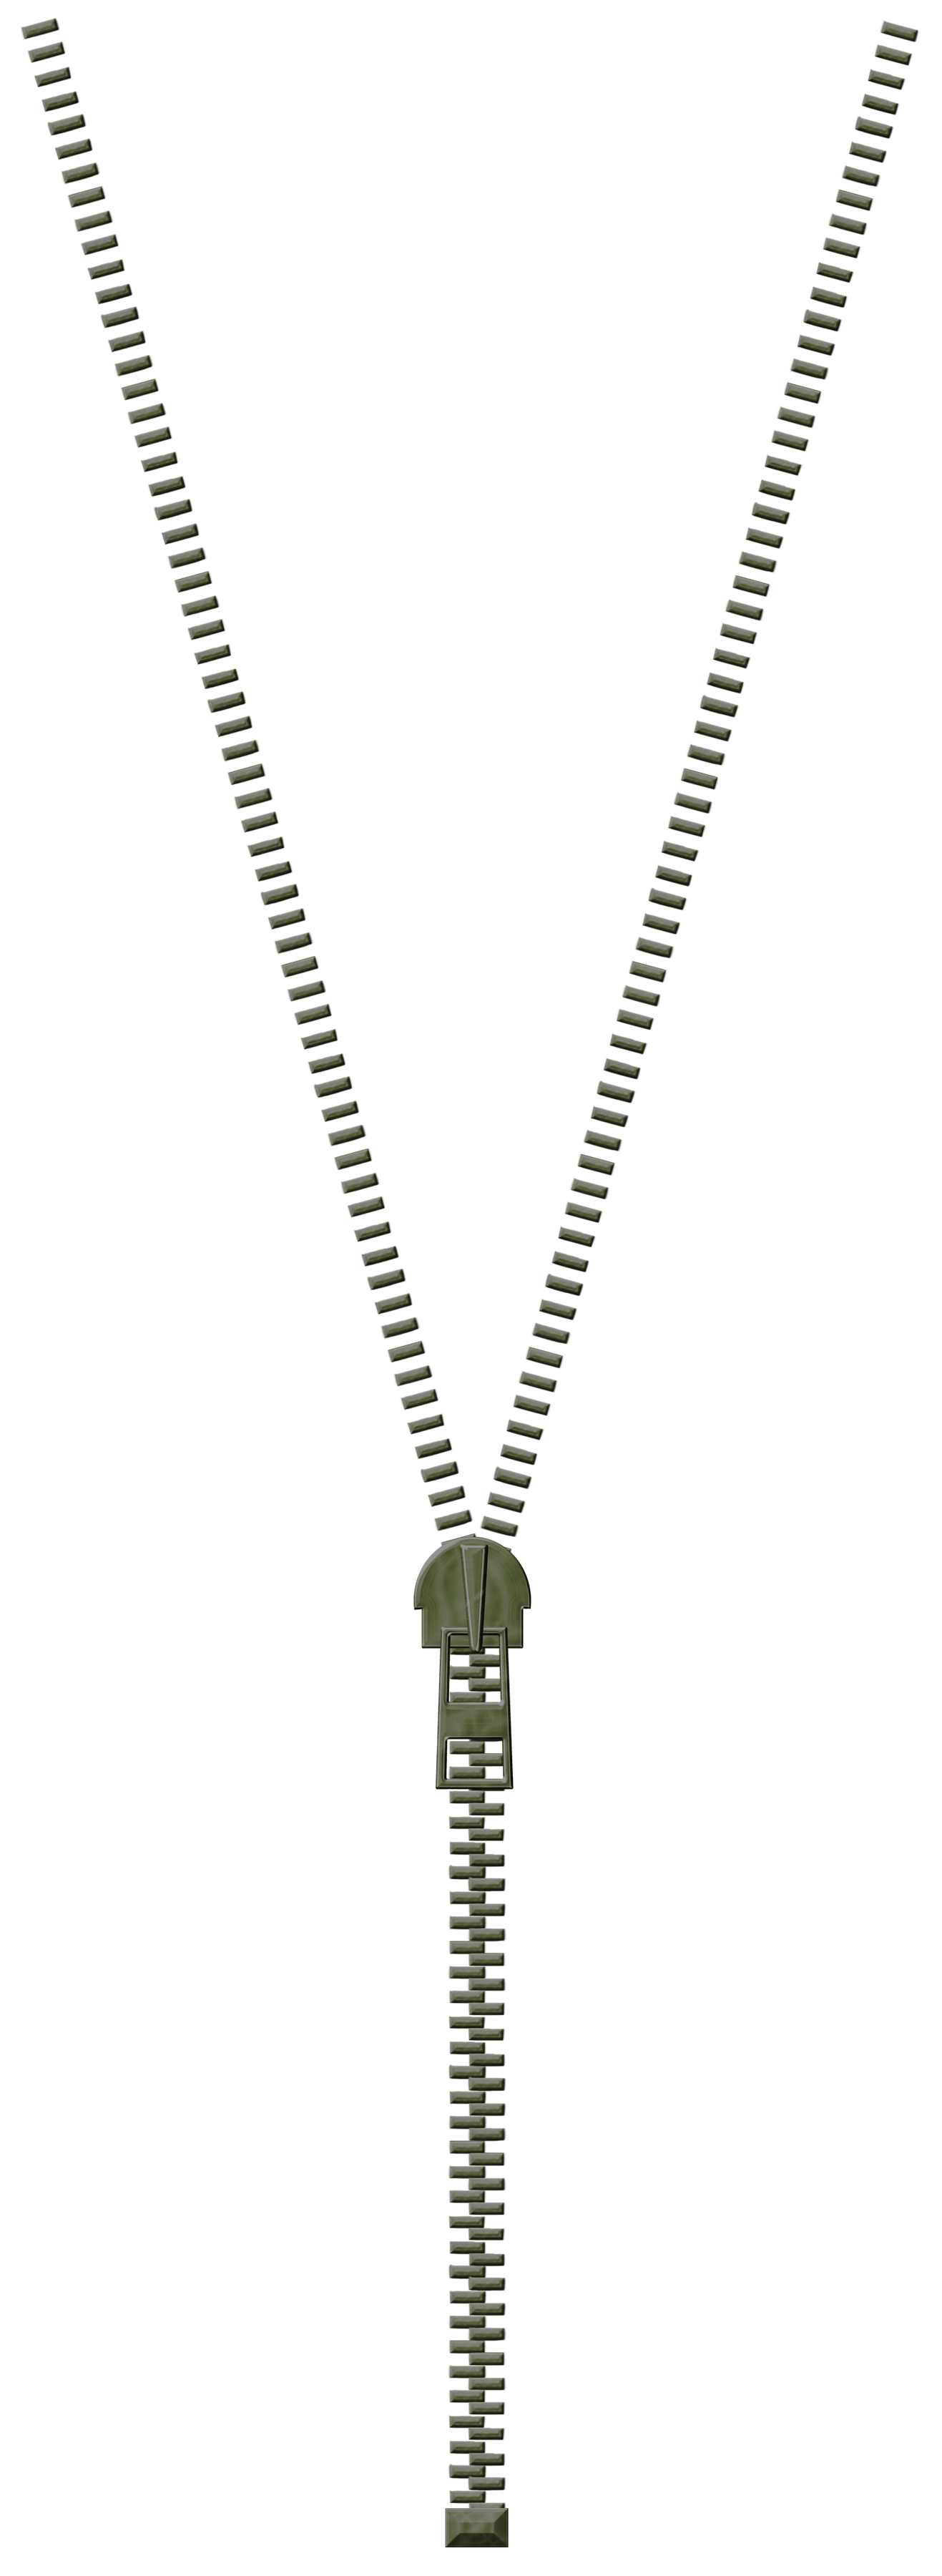 Zipper PNG Transparent Picture